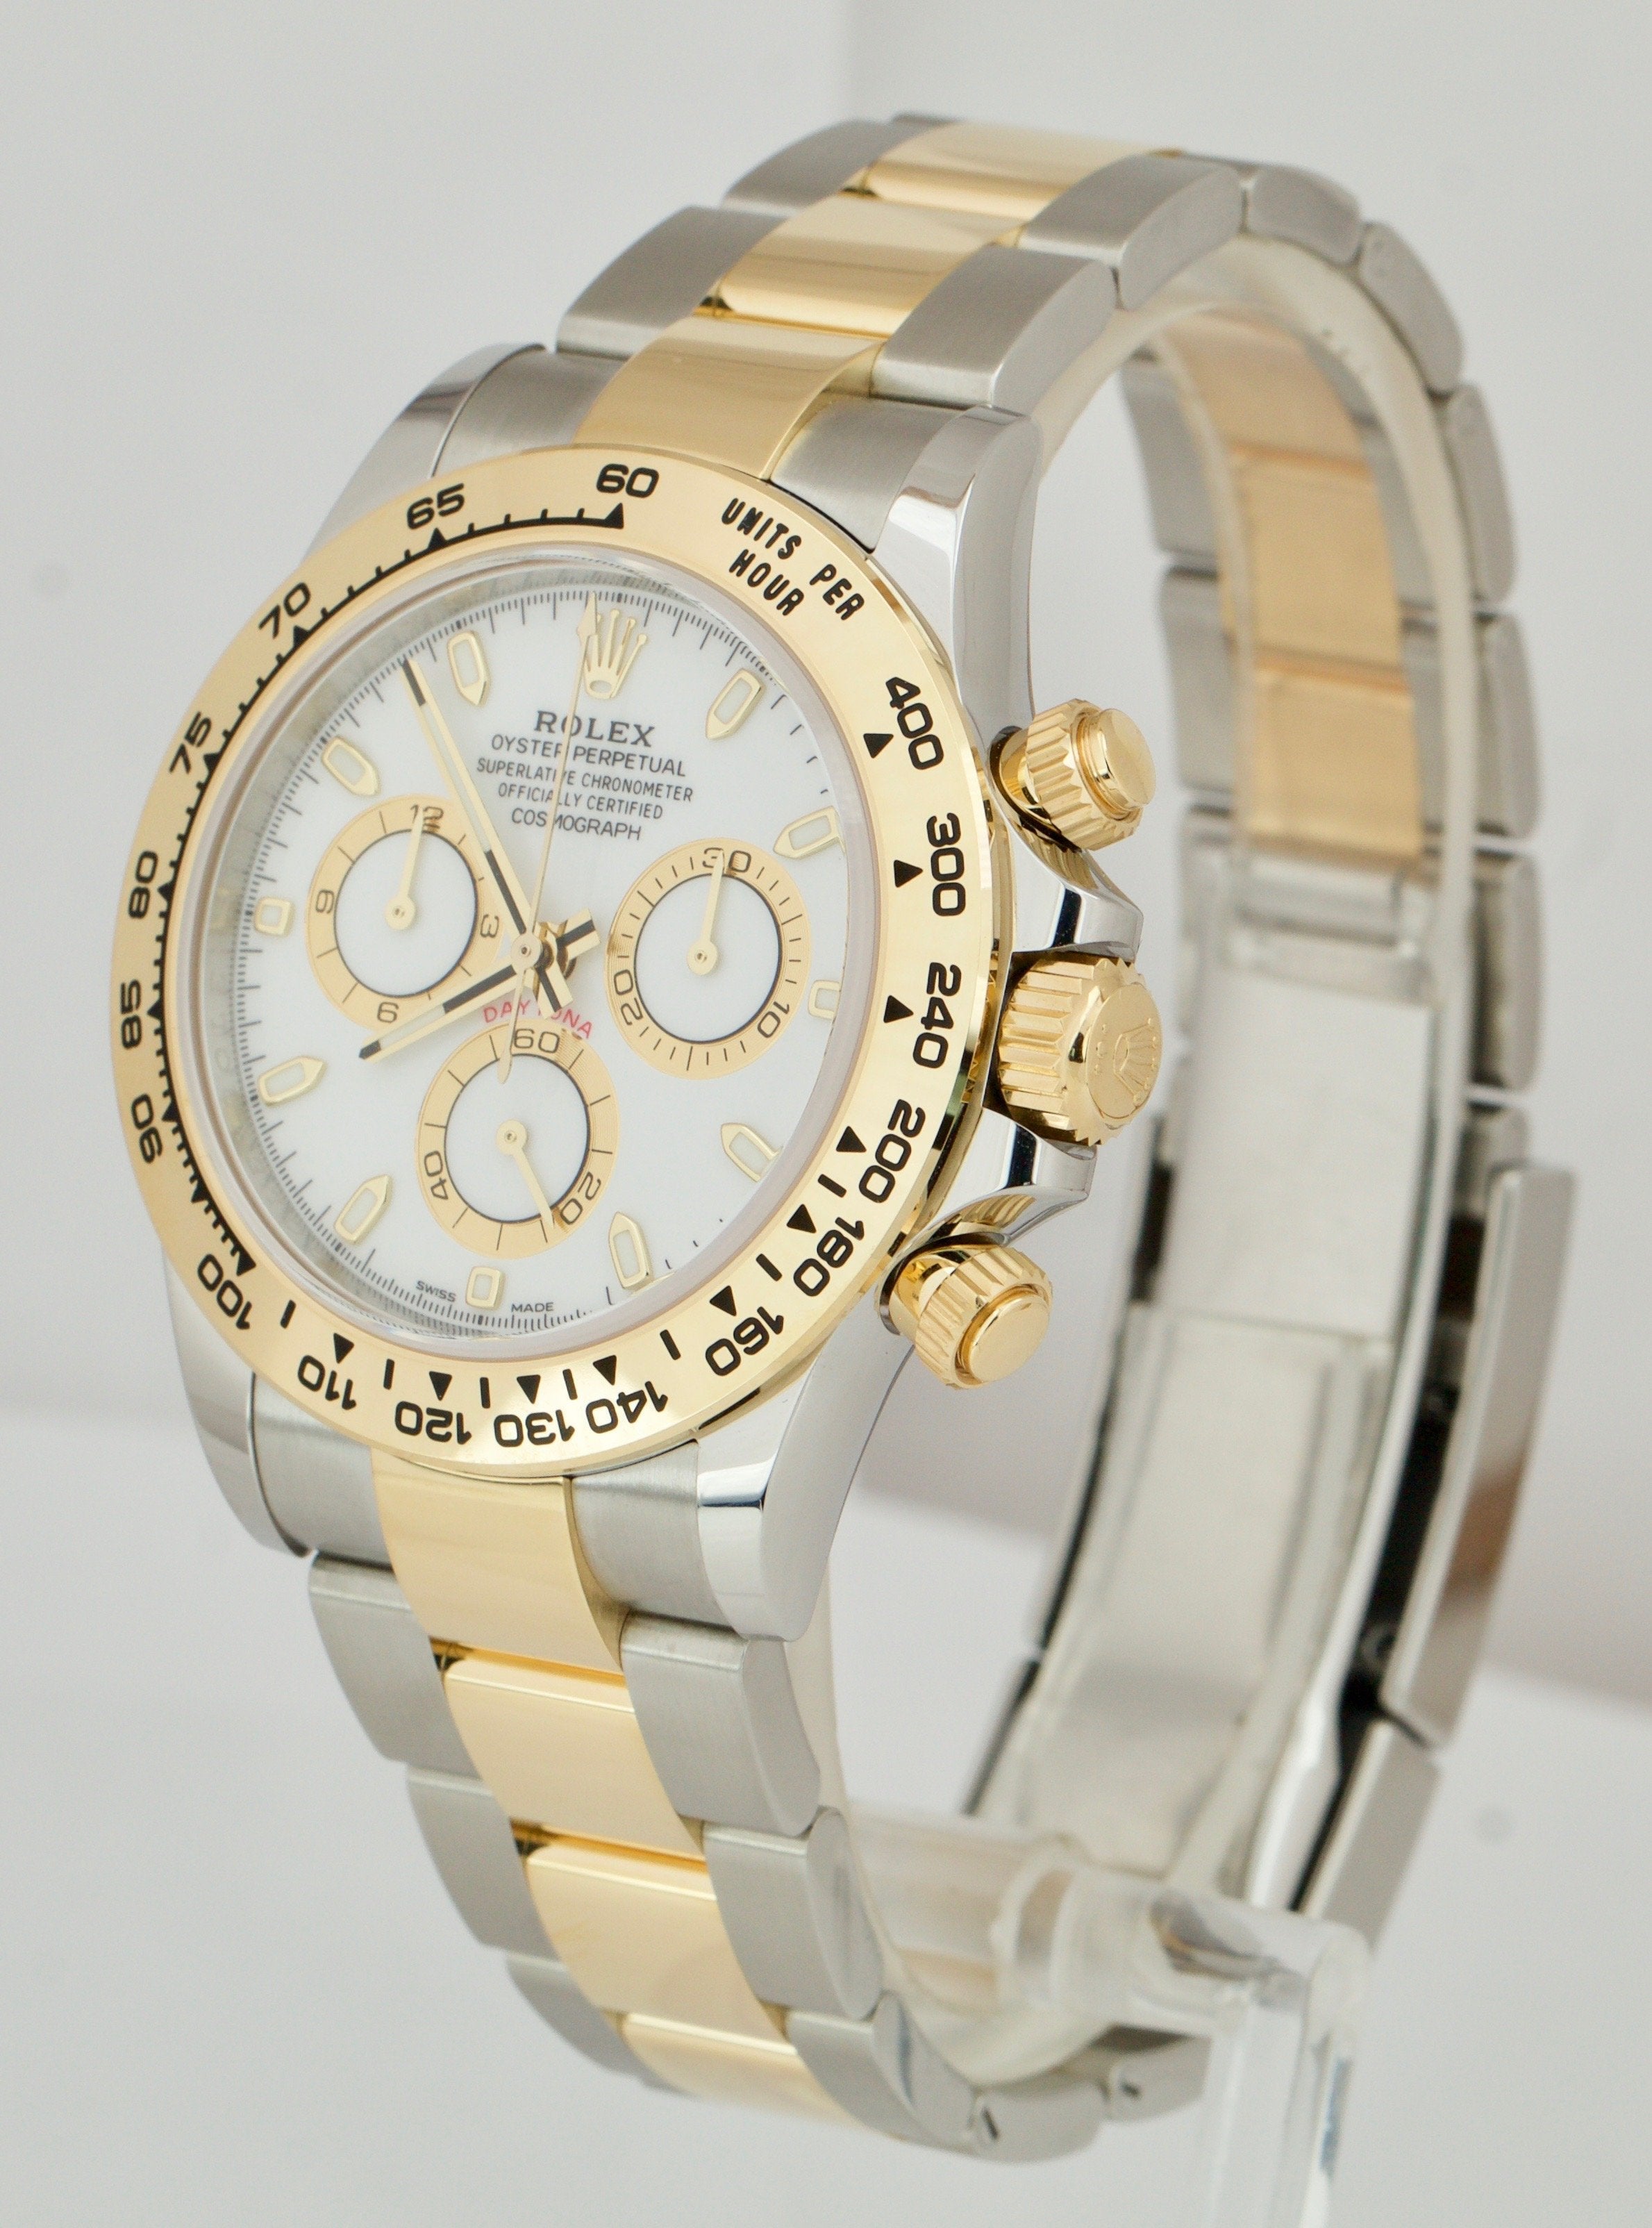 NEW MAR. 2022 Rolex Daytona Two-Tone Gold Steel White Chronograph Watch 116503